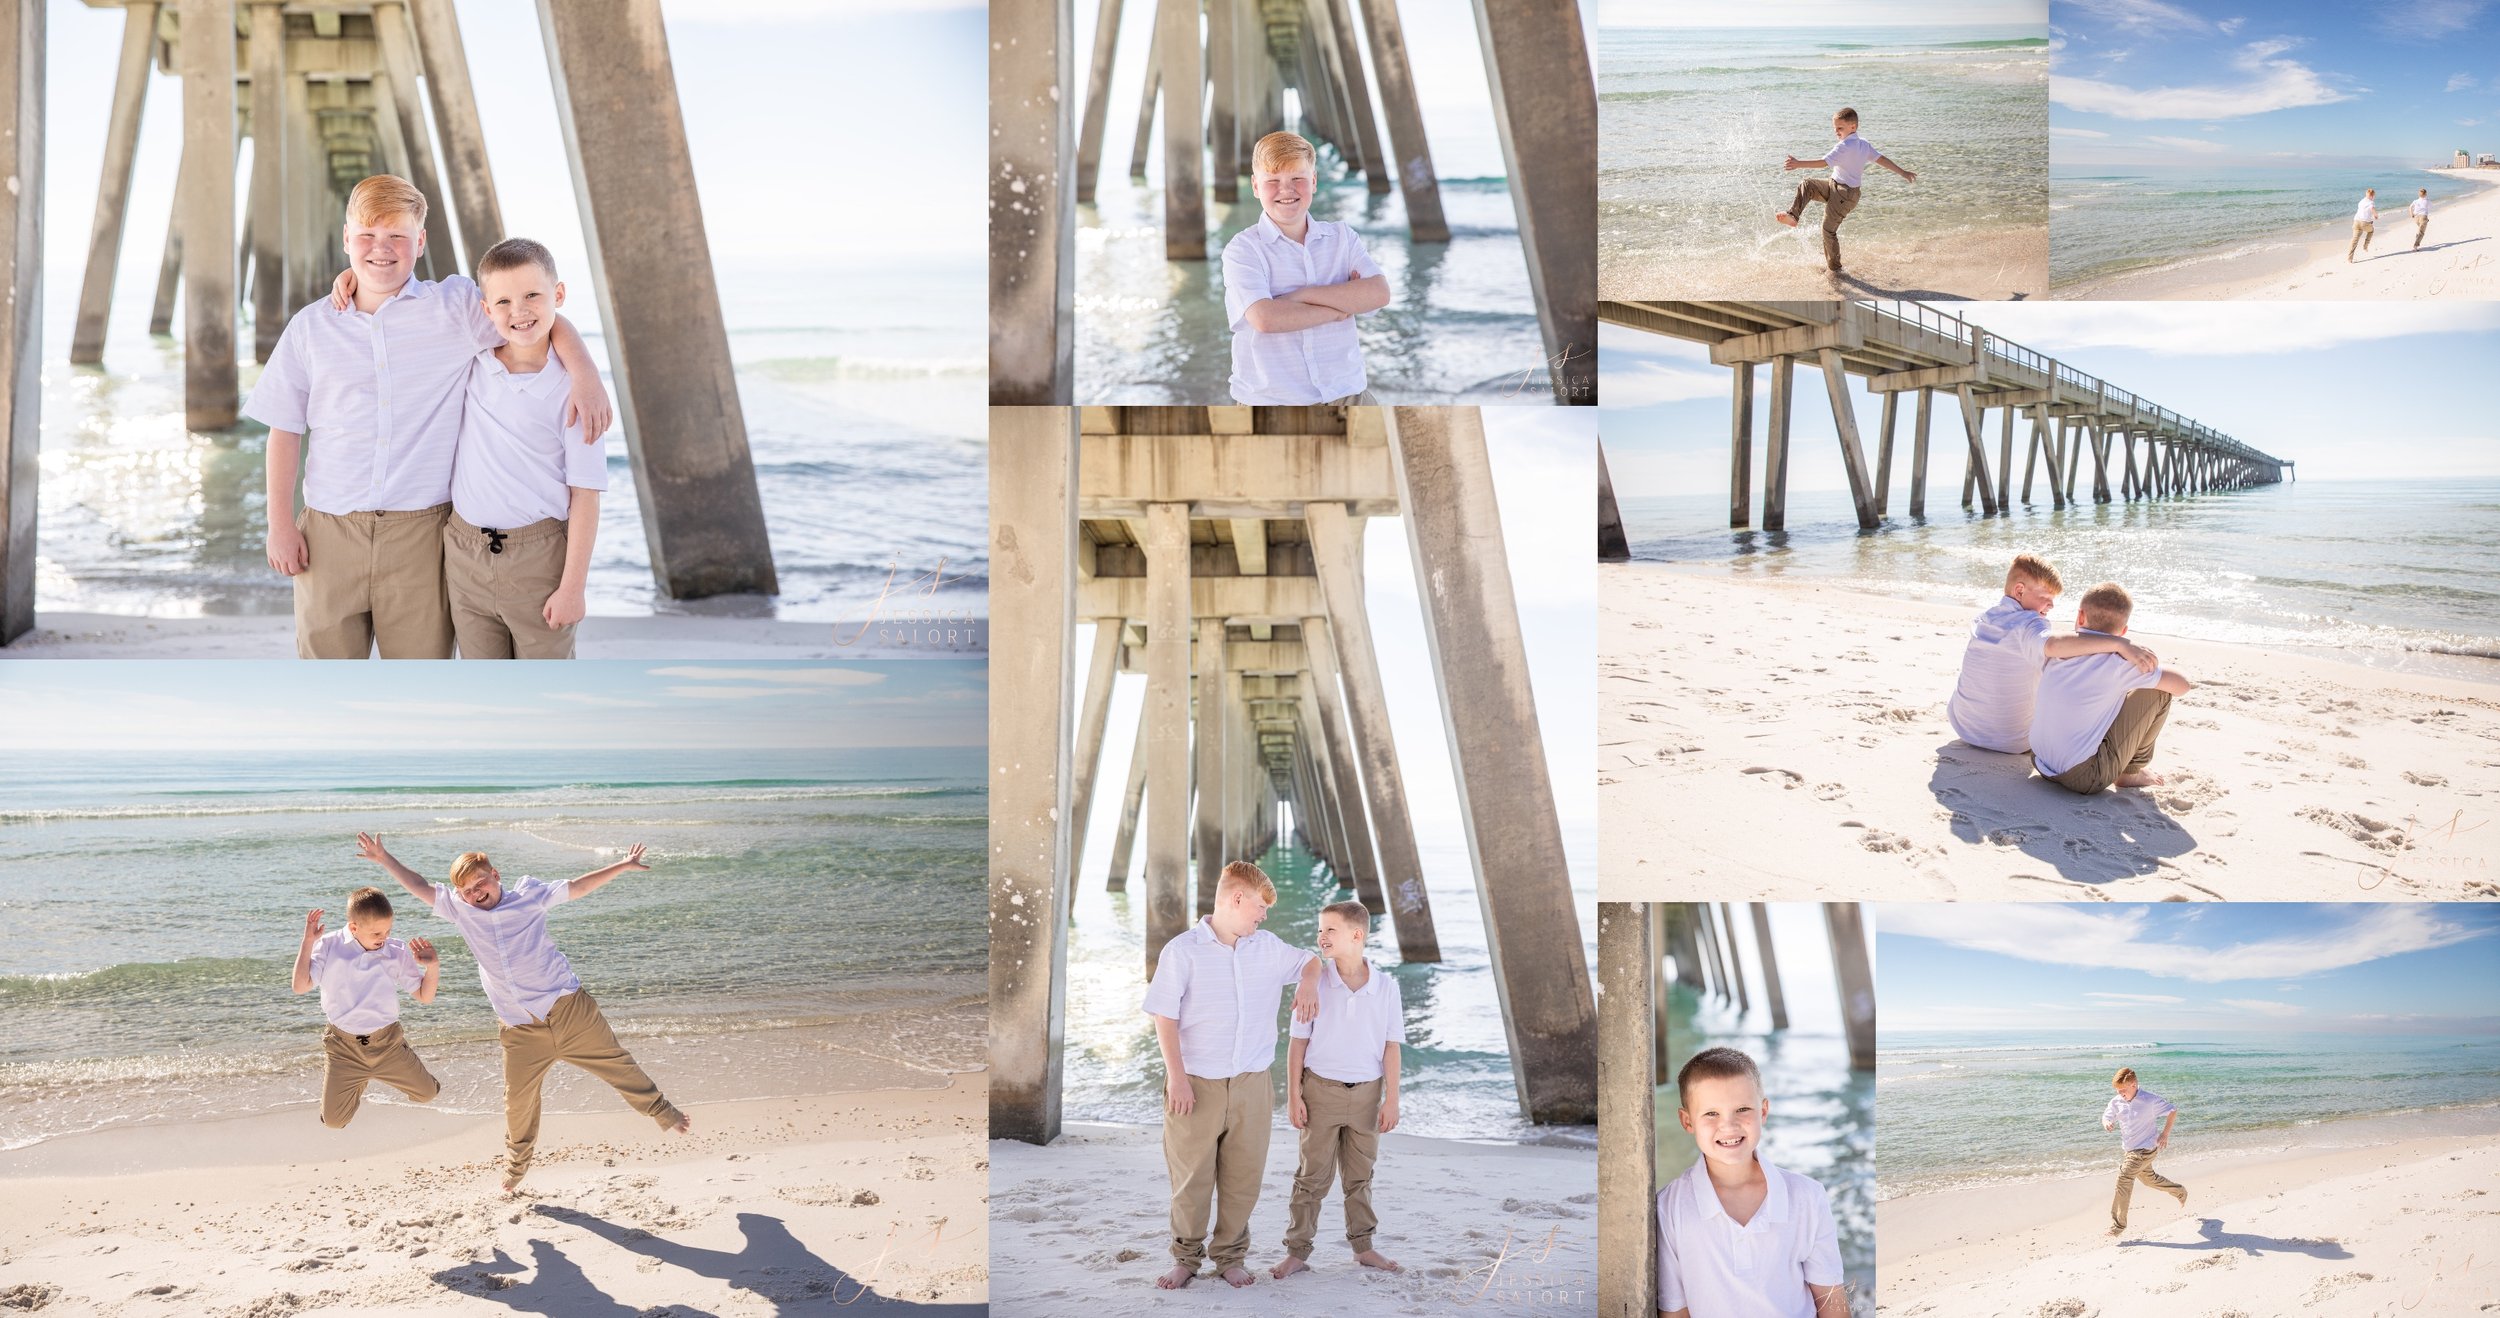 Navarre Beach Sunset Photographer - Jessica Salort (Copy) (Copy) (Copy) (Copy)